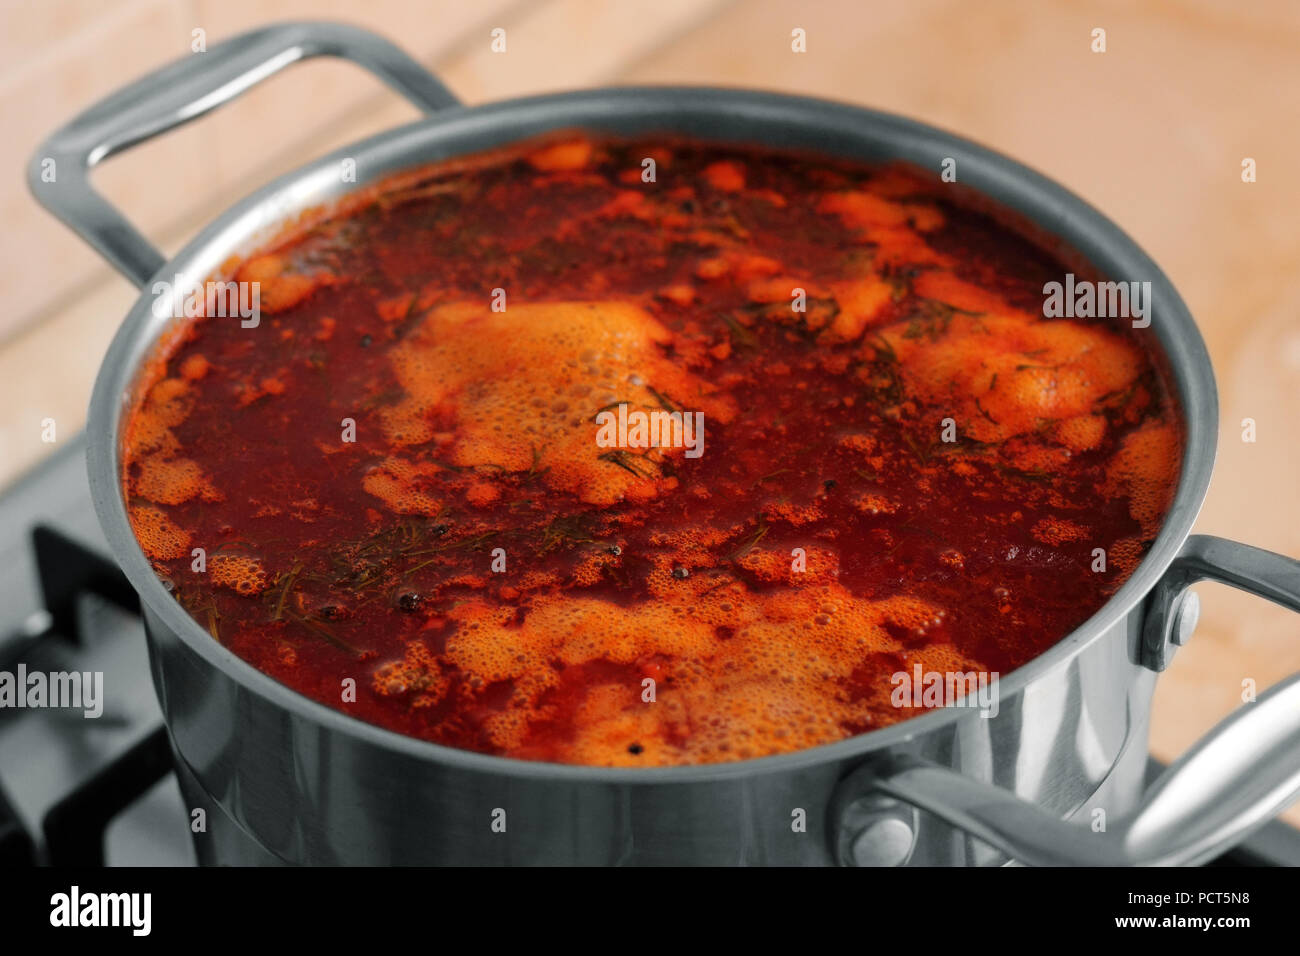 A pan of borsch cooking on a gas-stove photo Stock Photo